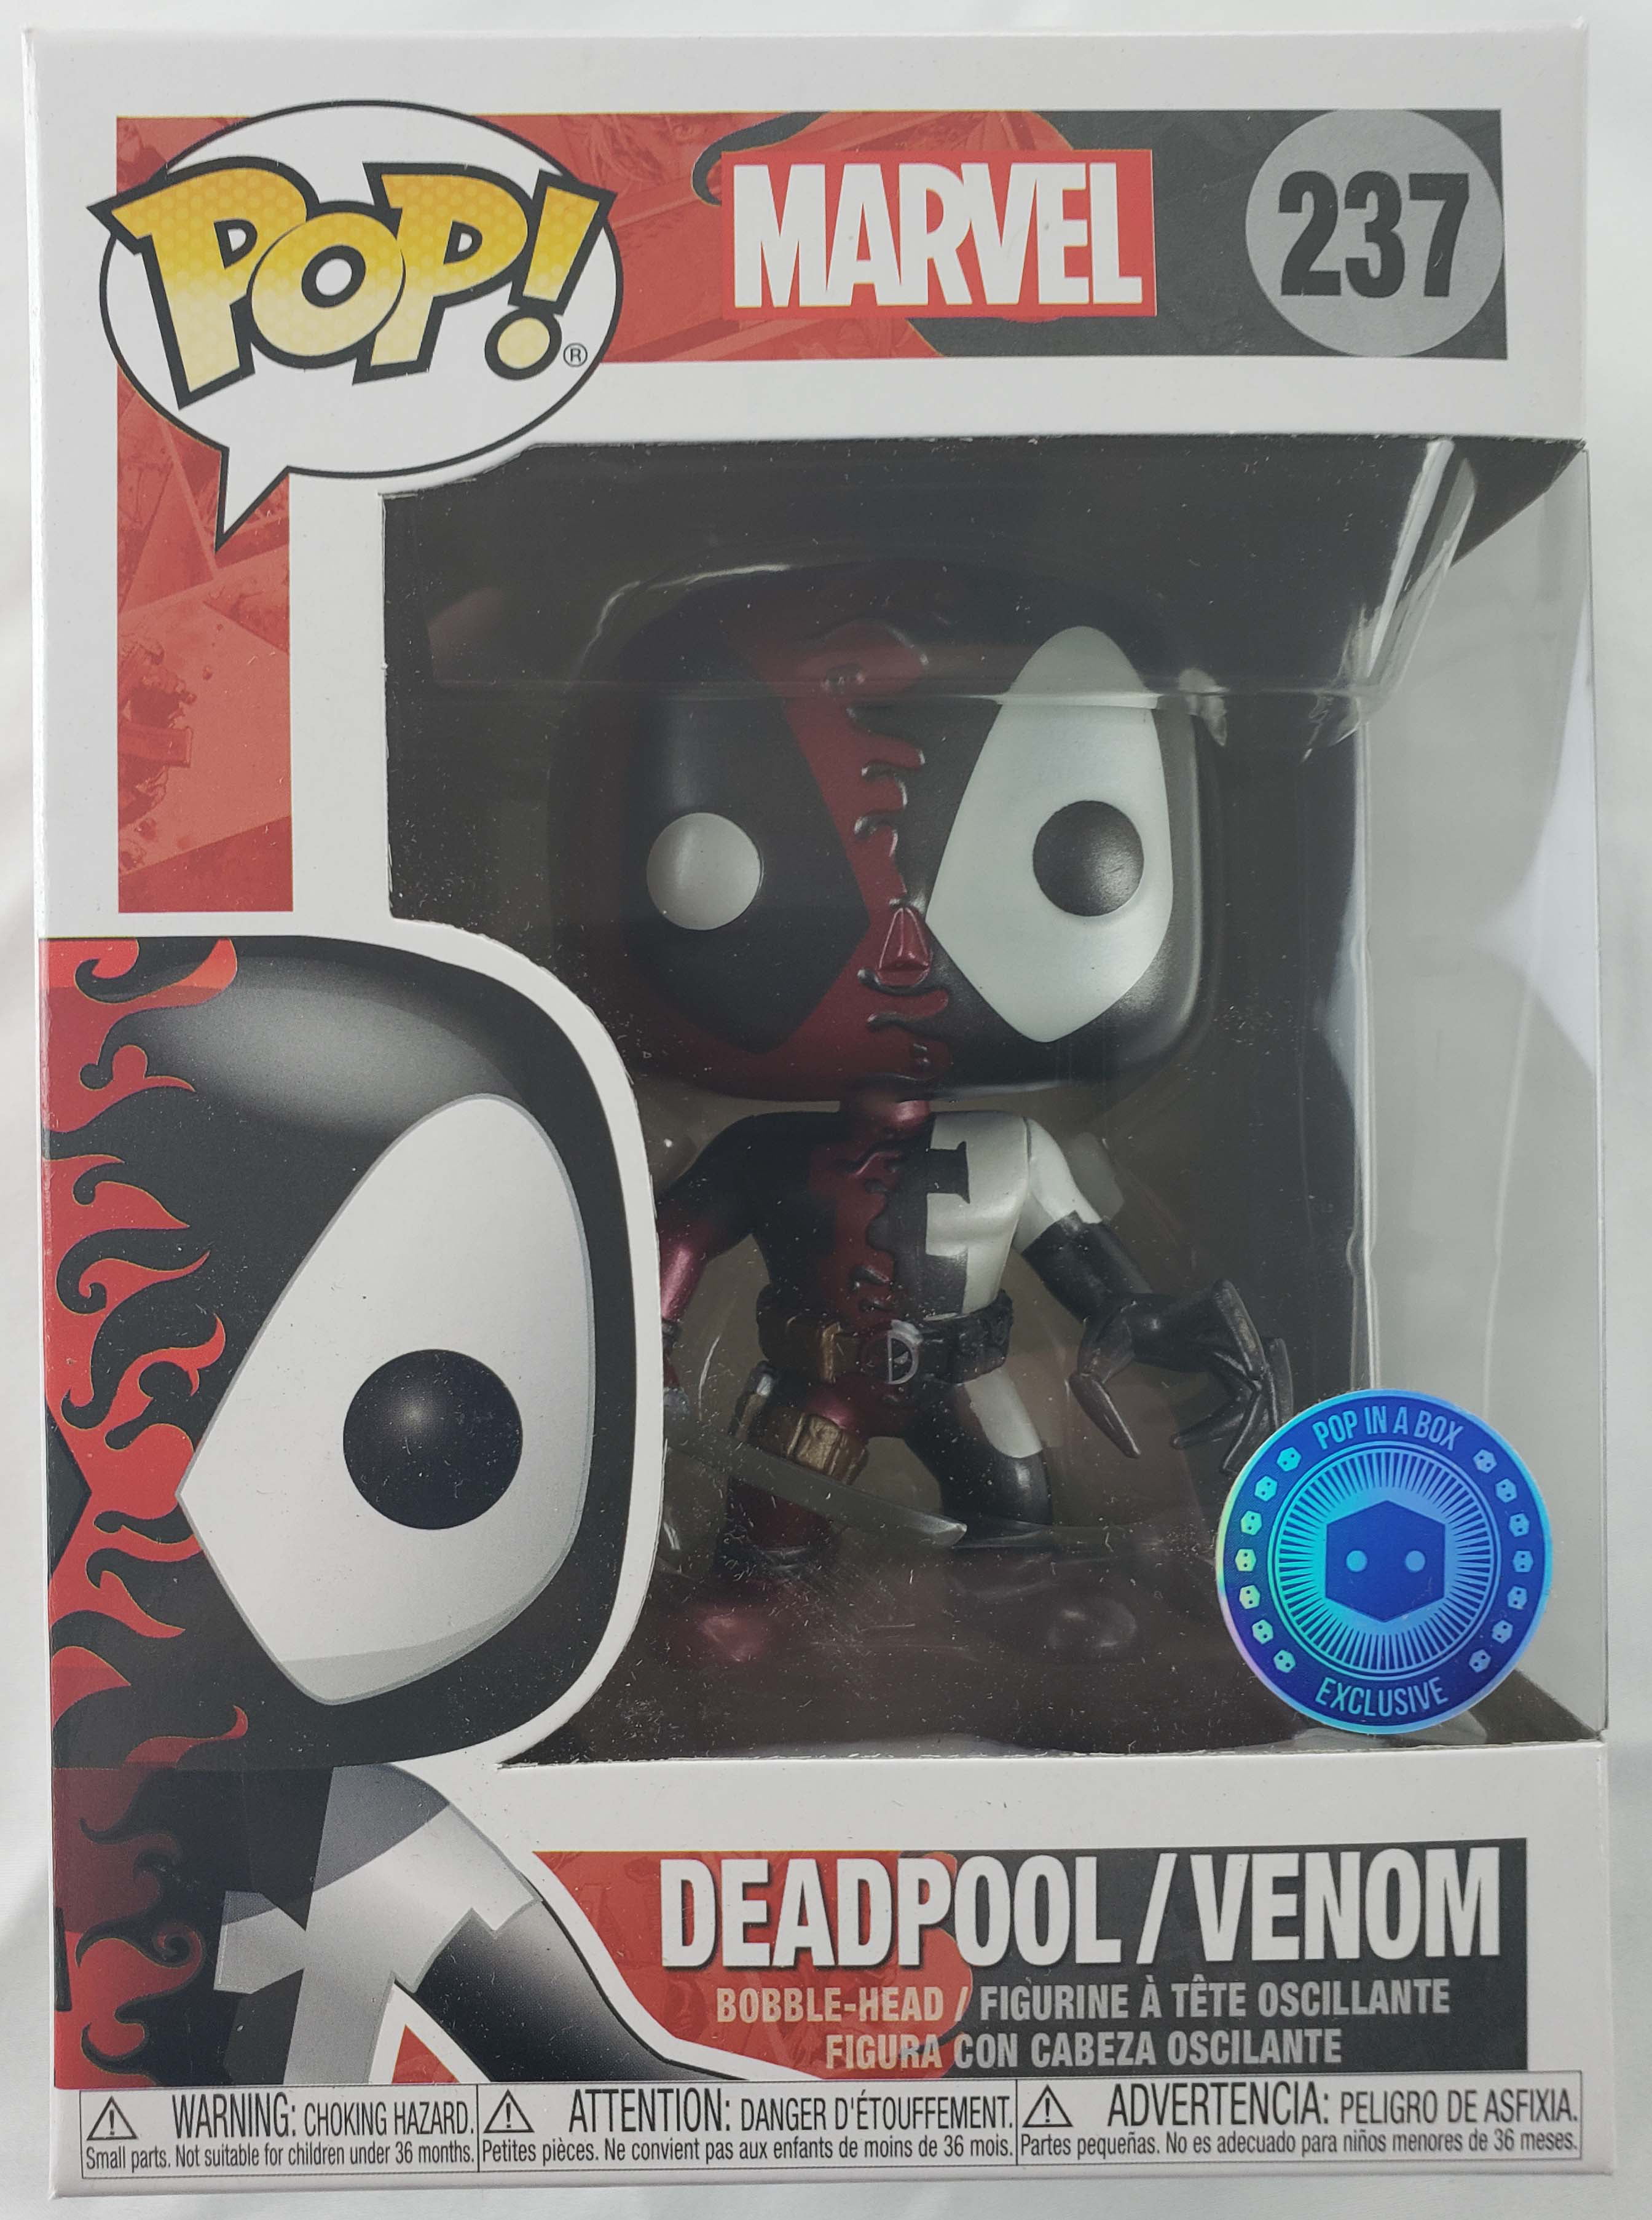 Funko Pop Marvel Metallic Deadpool Venom Pop in a Box Exclusive with 